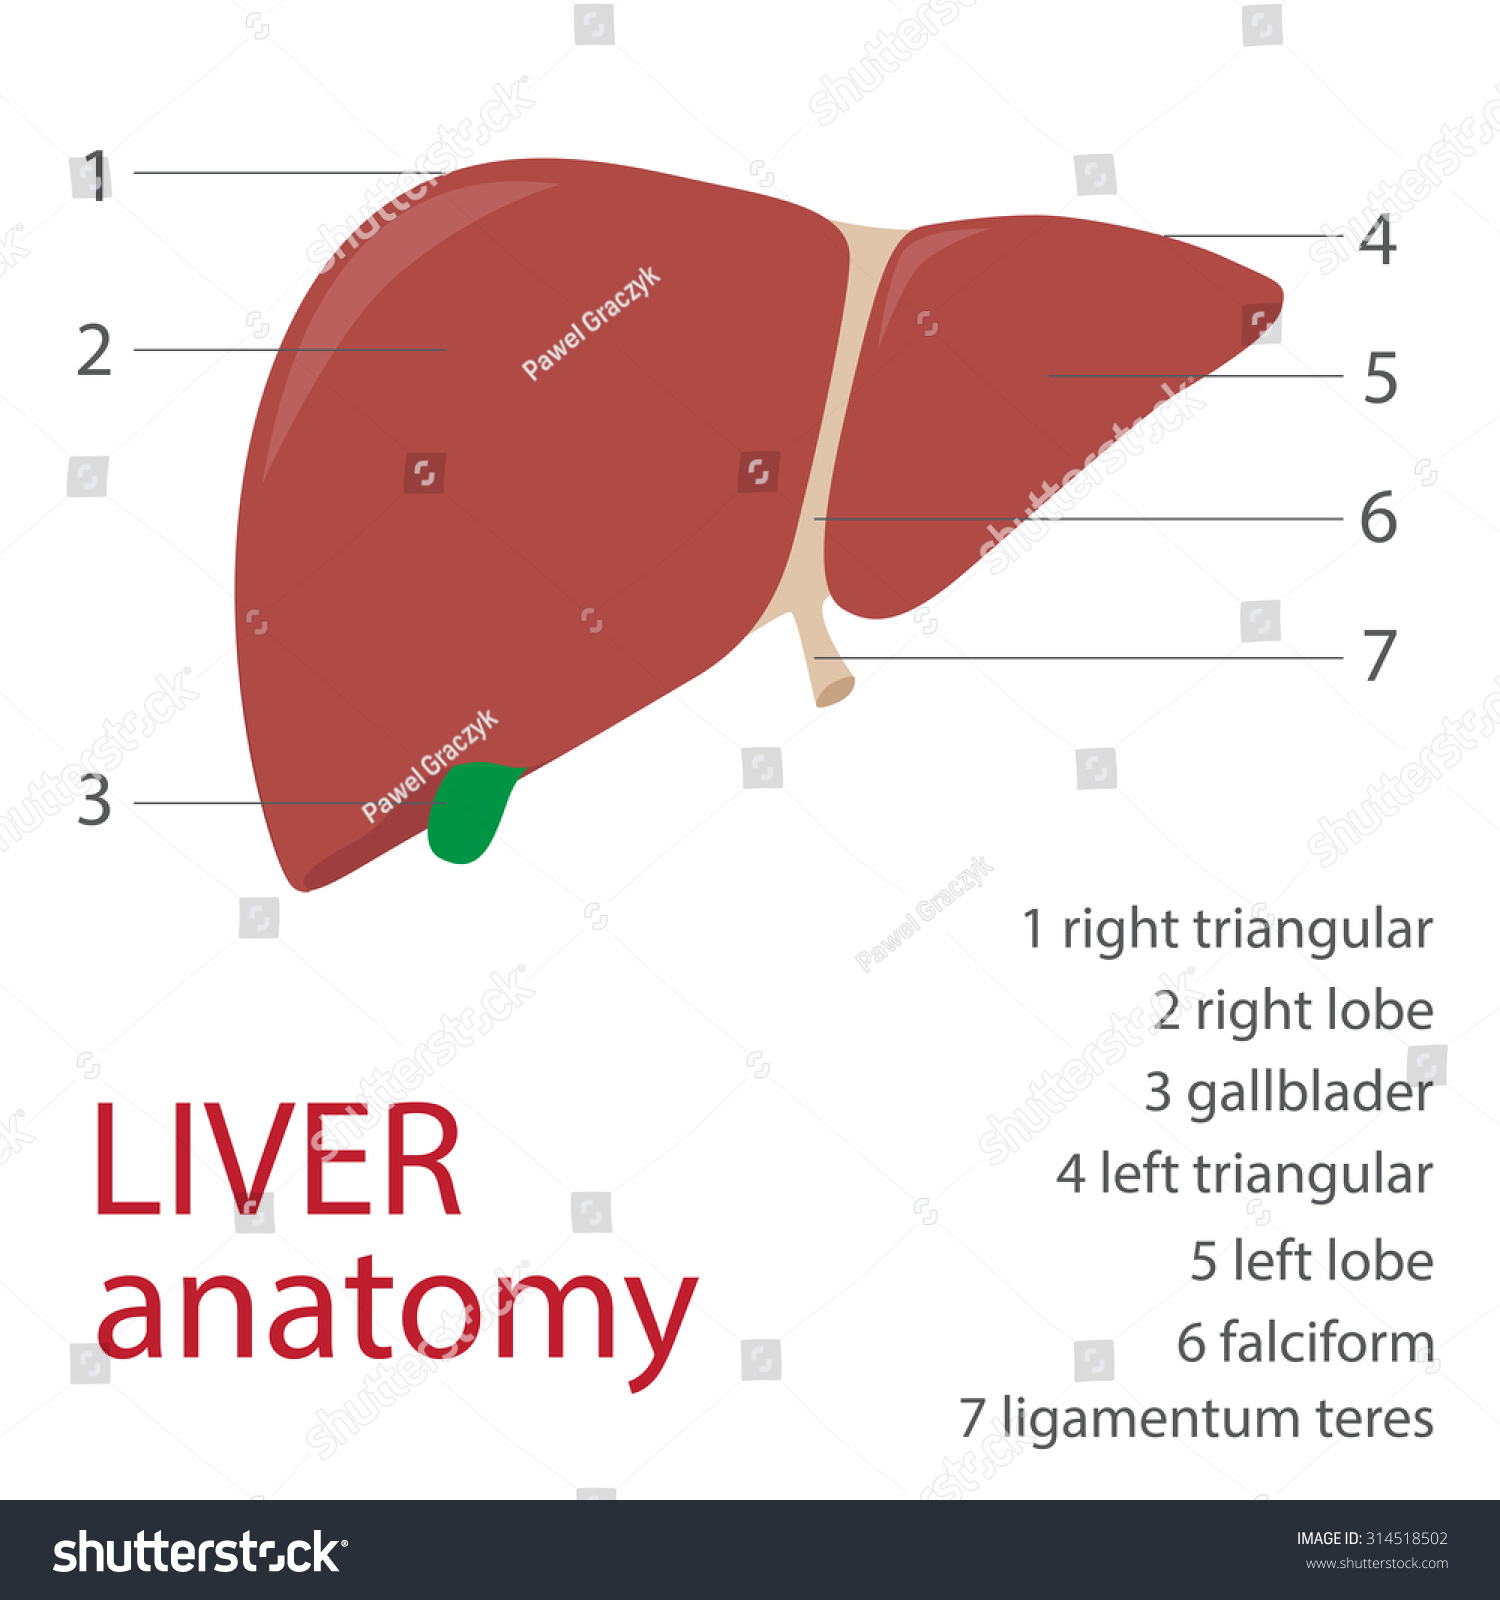 Human Liver Anatomy Description Vector Format Stock Vector 314518502